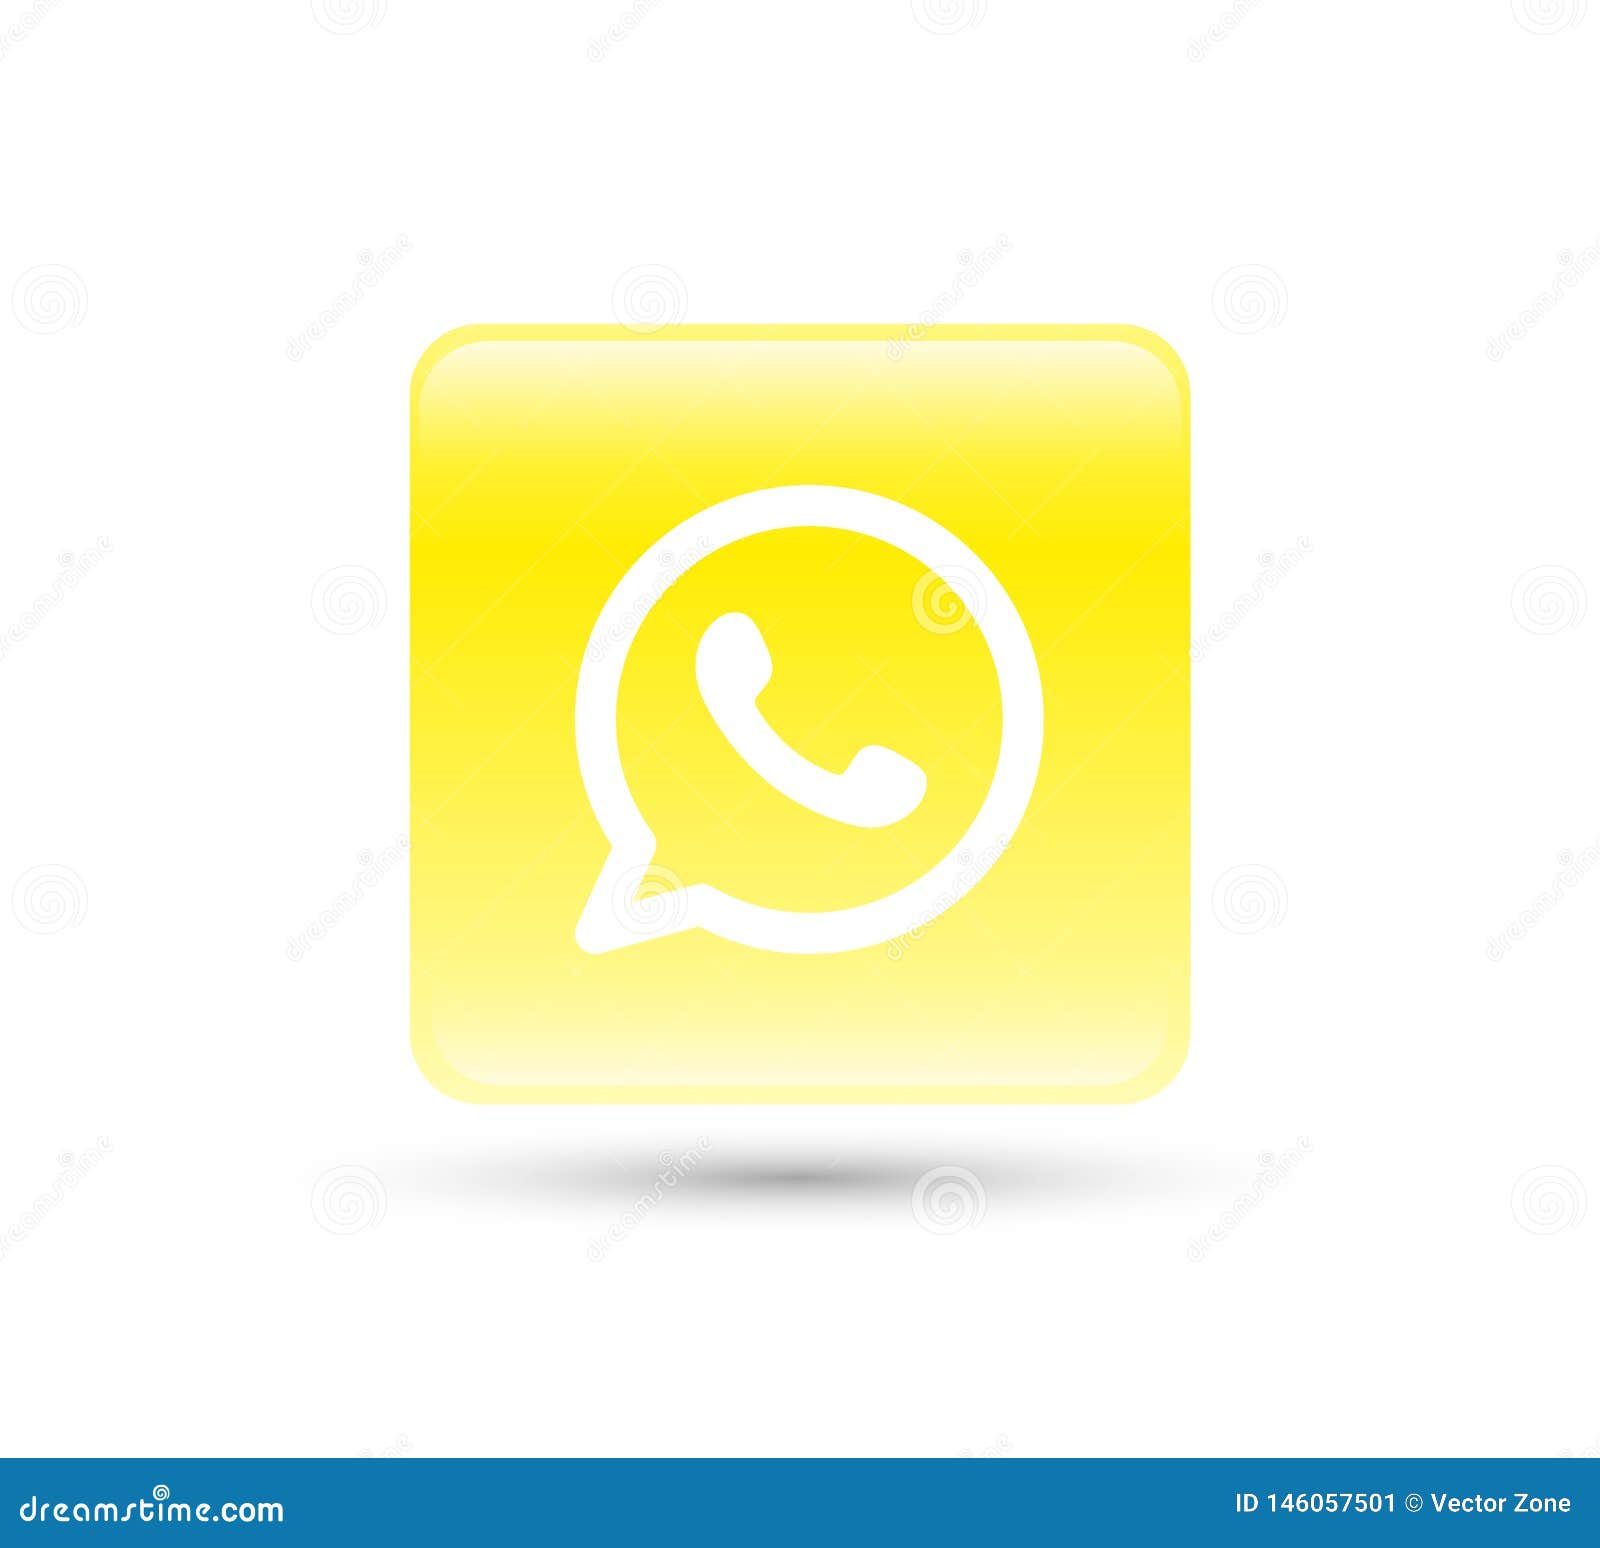 what is whatsapp stock symbol